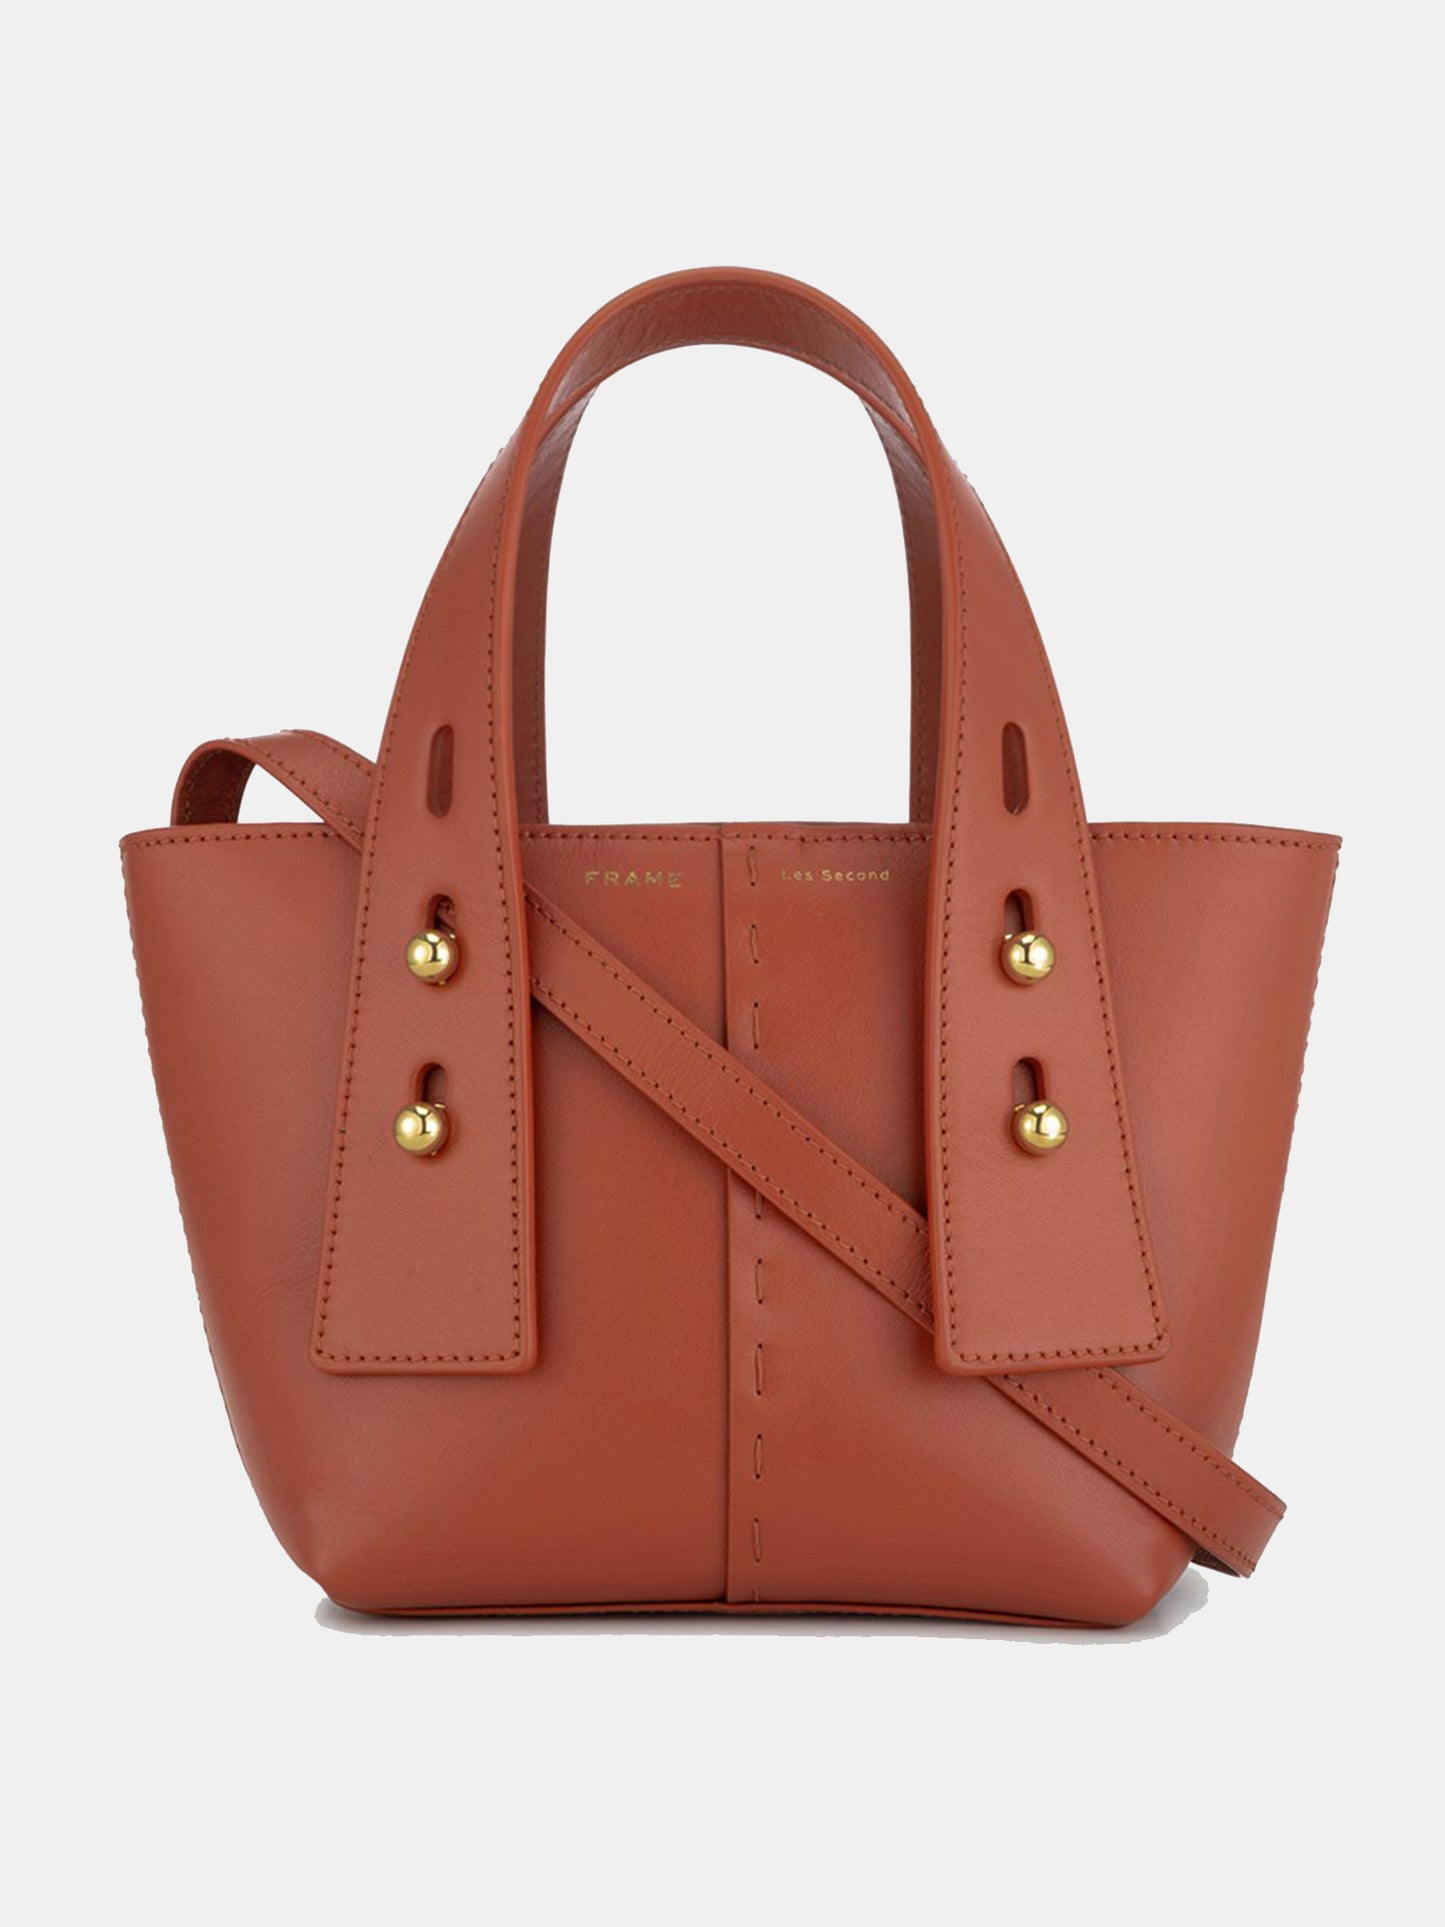 Frame Women's Les Second Mini Handbag